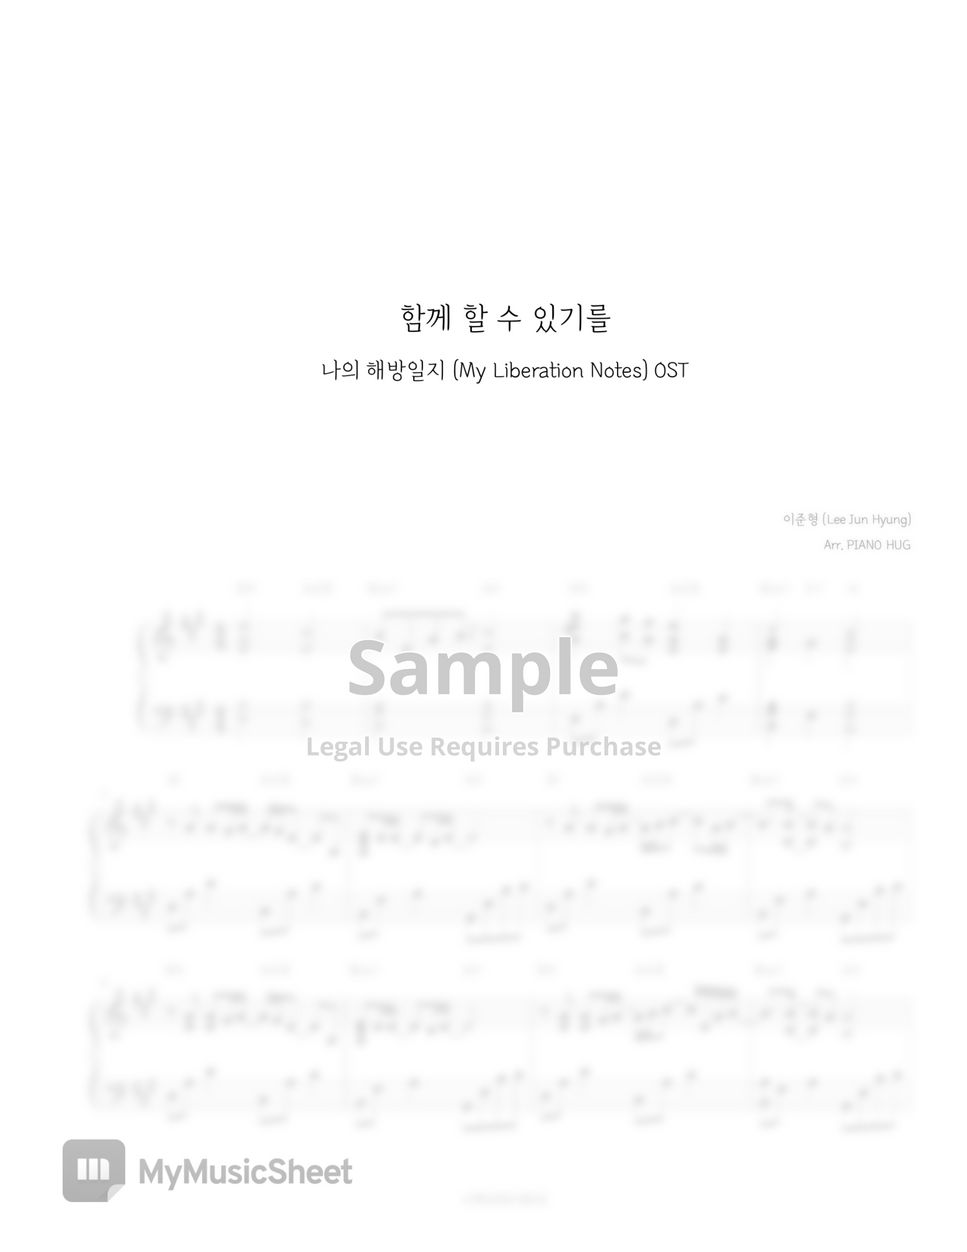 My Liberation Notes (나의 해방일지) OST - Lee Jun Hyung (이준형) - To Be Together (함께 할 수 있기를) by Piano Hug